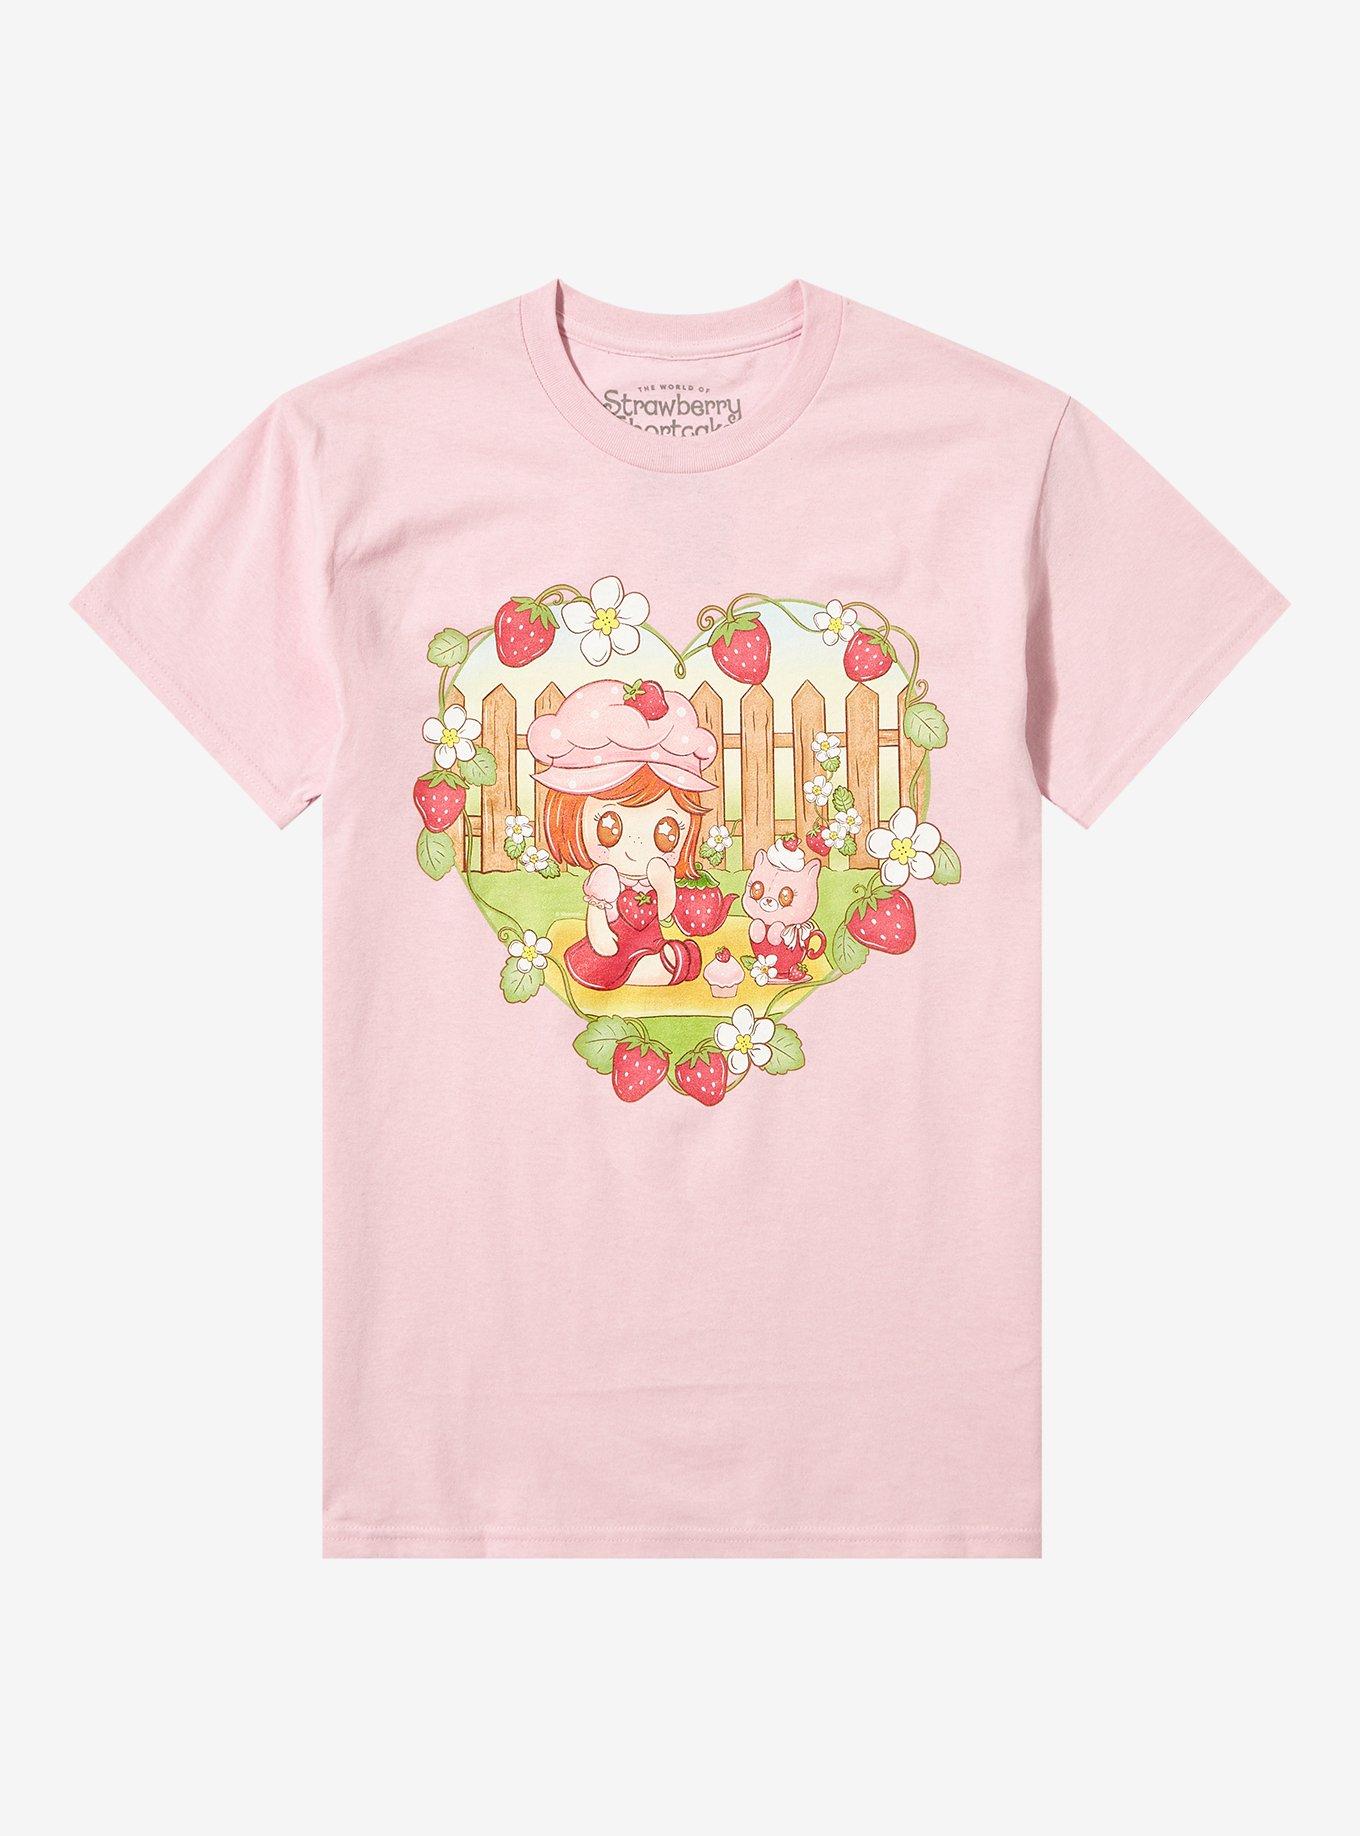 Strawberry Shortcake X Spooksieboo Heart Boyfriend Fit Girls T-Shirt, MULTI, hi-res